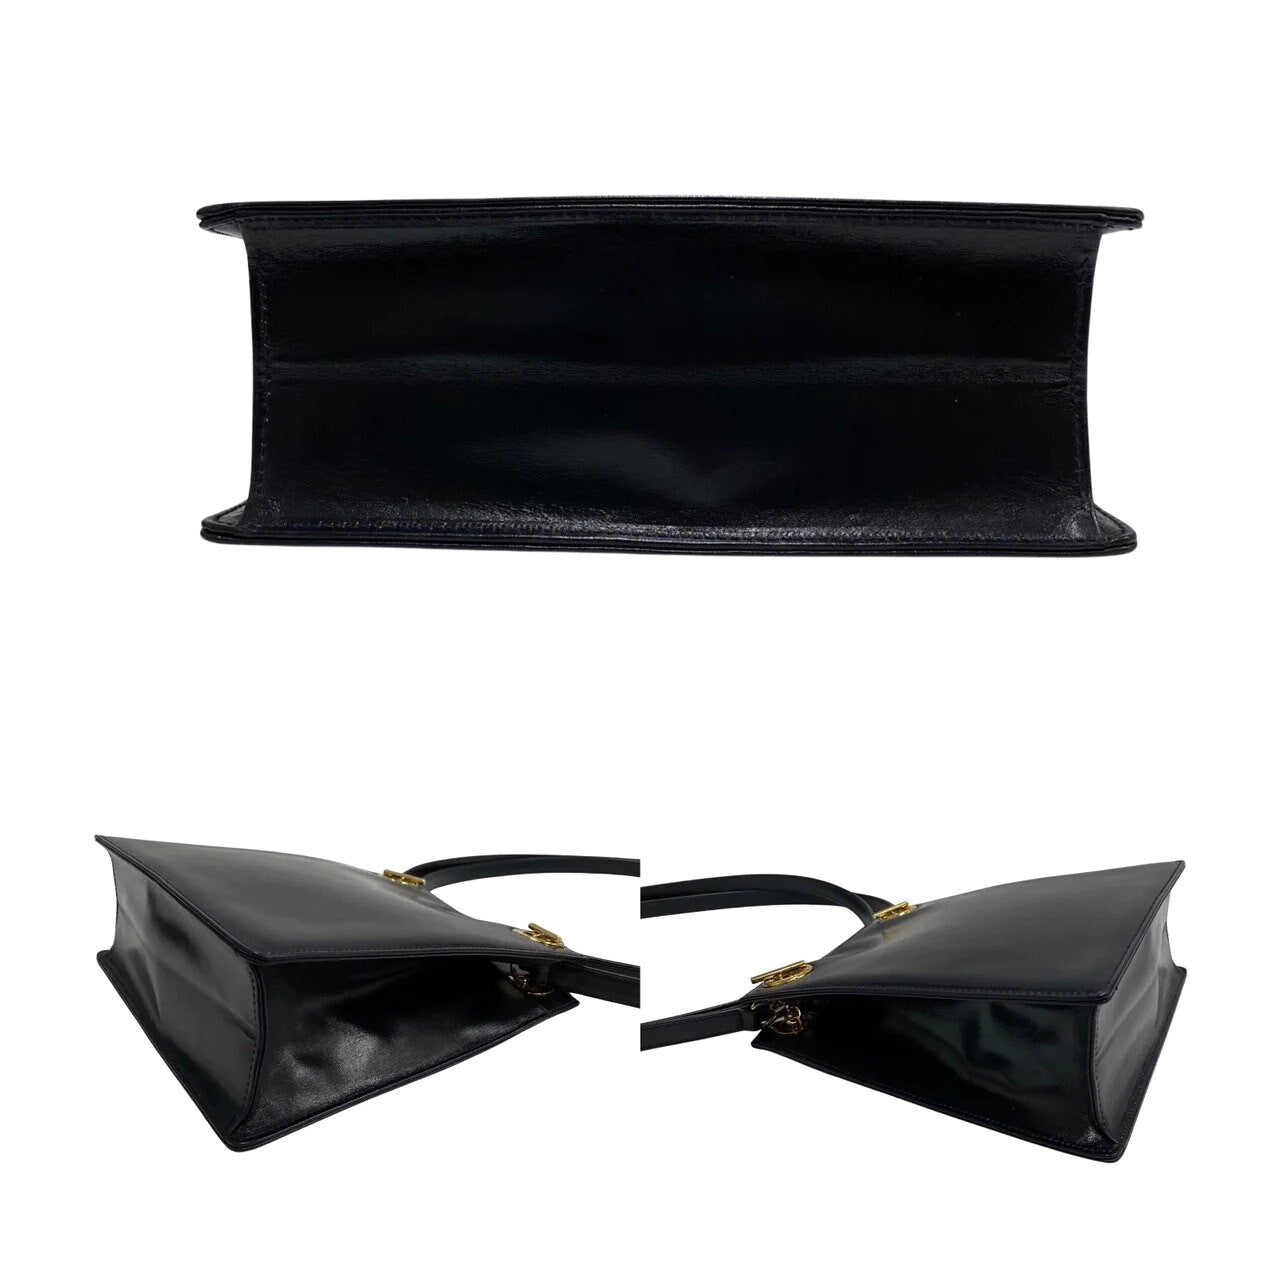 GUCCI VINTAGE 100% Authentic Genuine Leather Shoulder Bag, Black, Y2K, 2000's, Great Condition, Rare